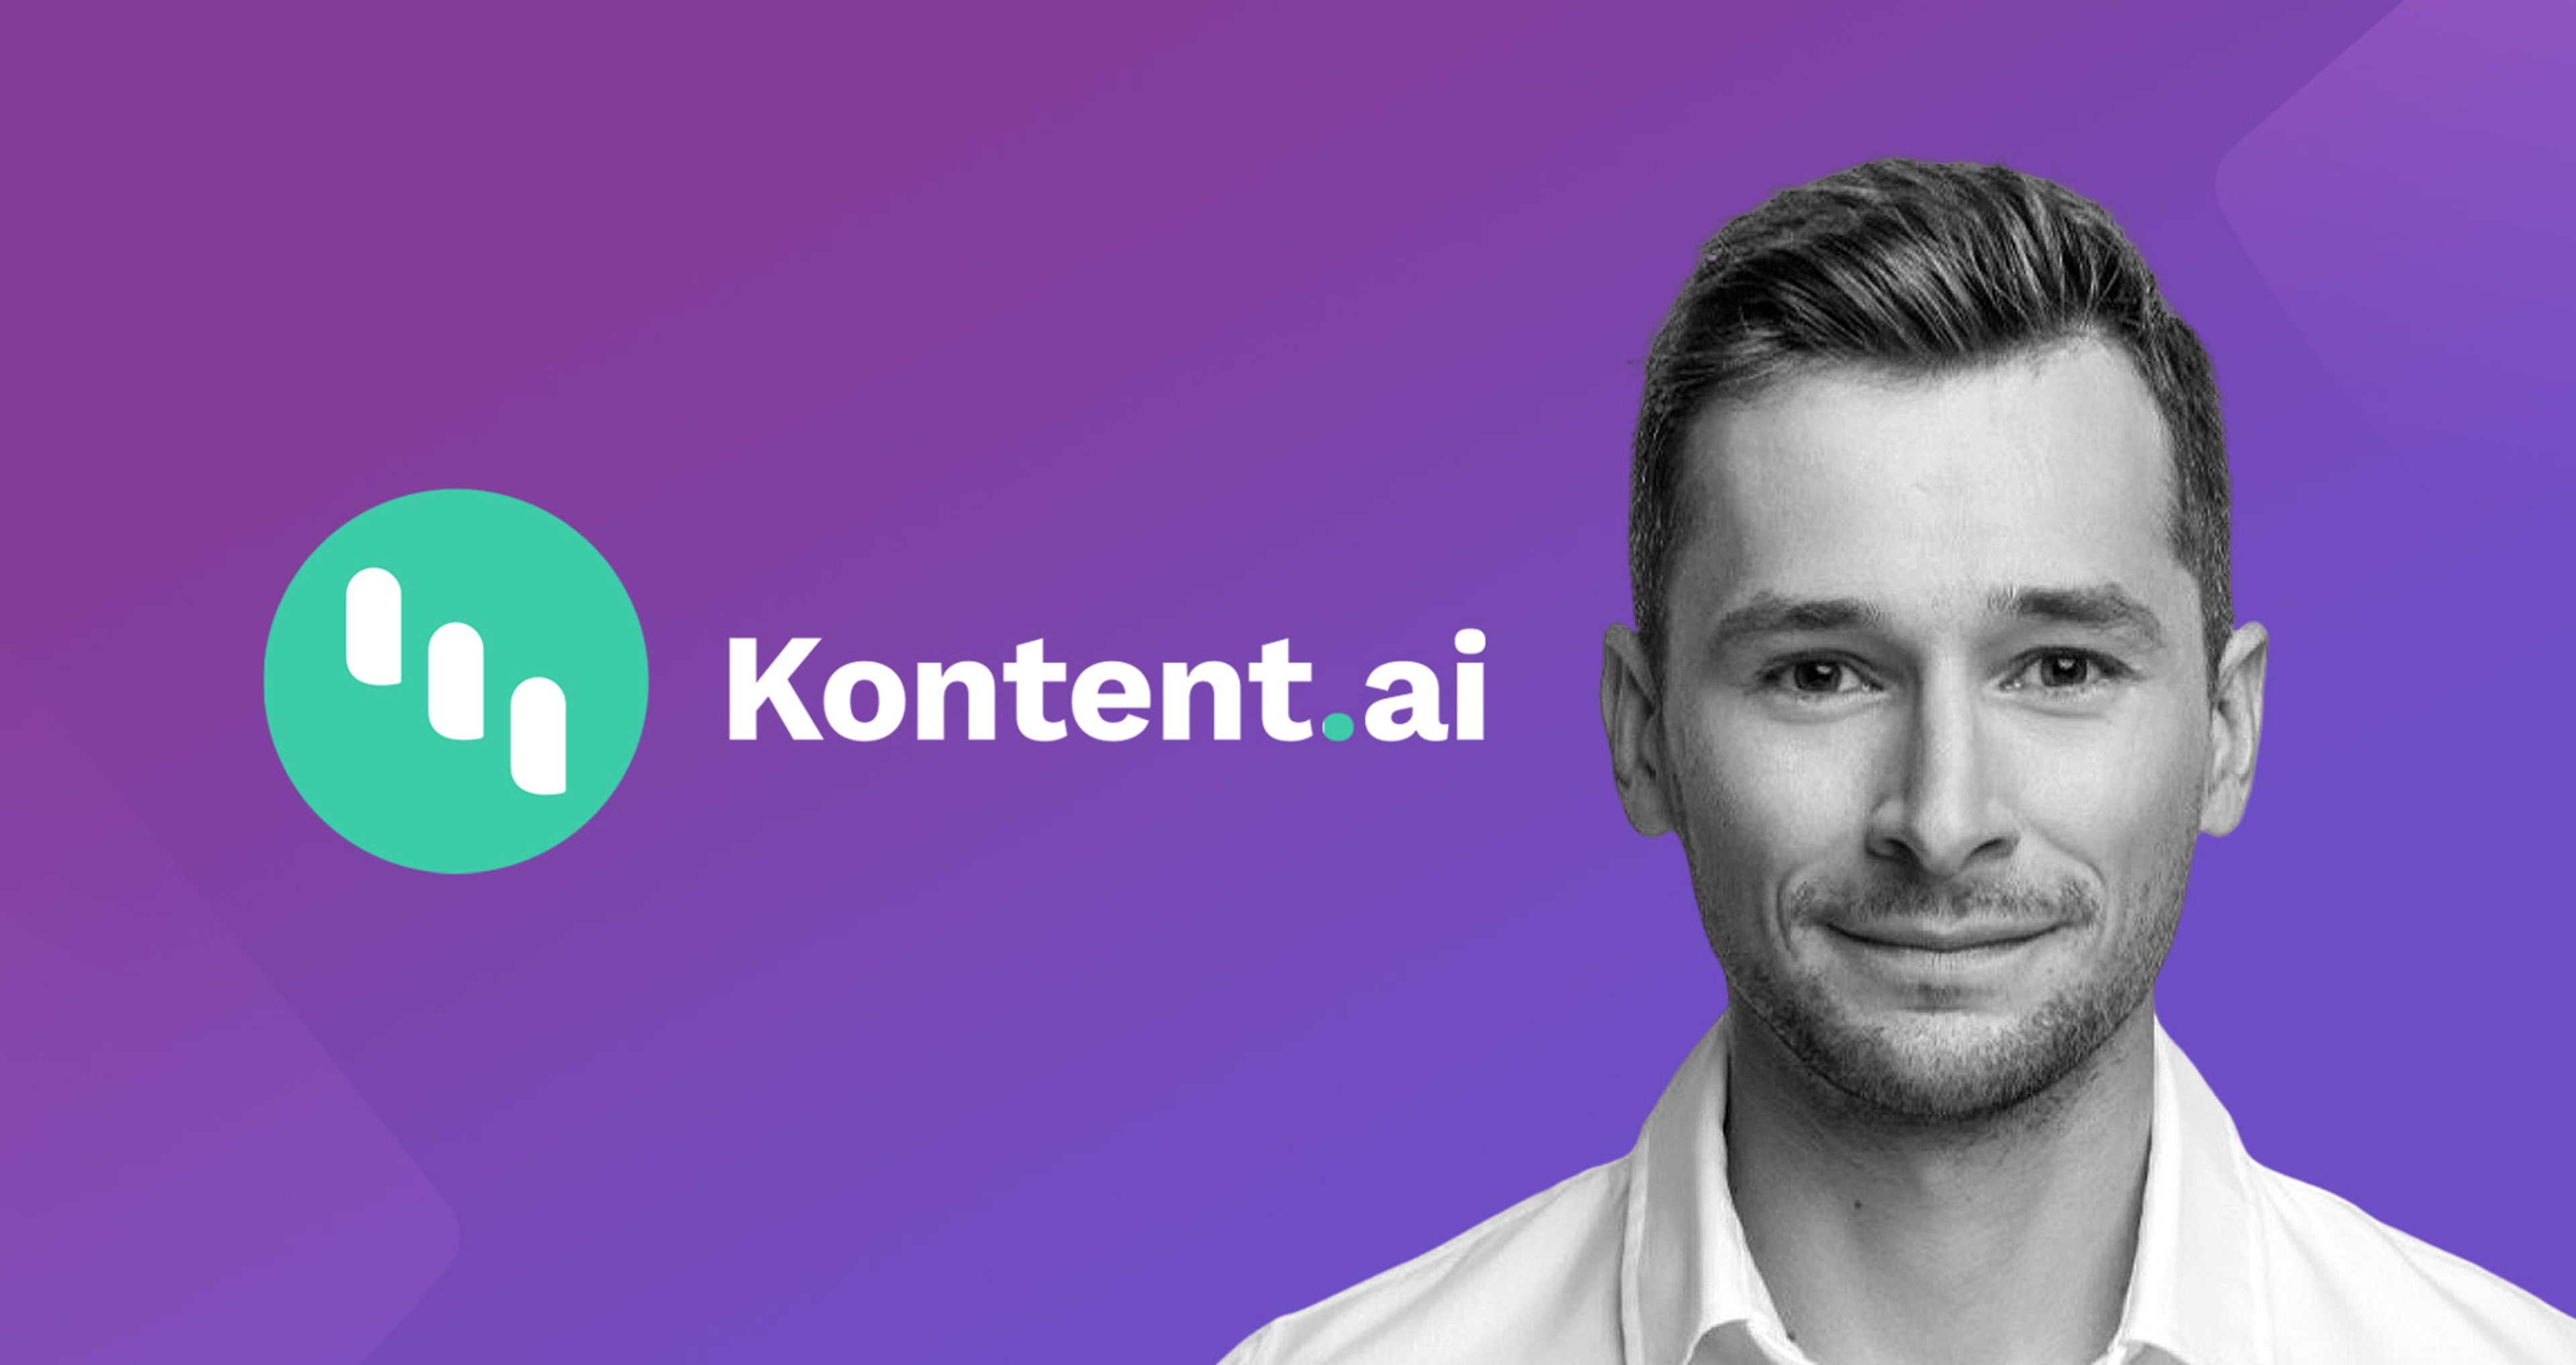 Kontent.ai logo with headshot of Vojtech Boril